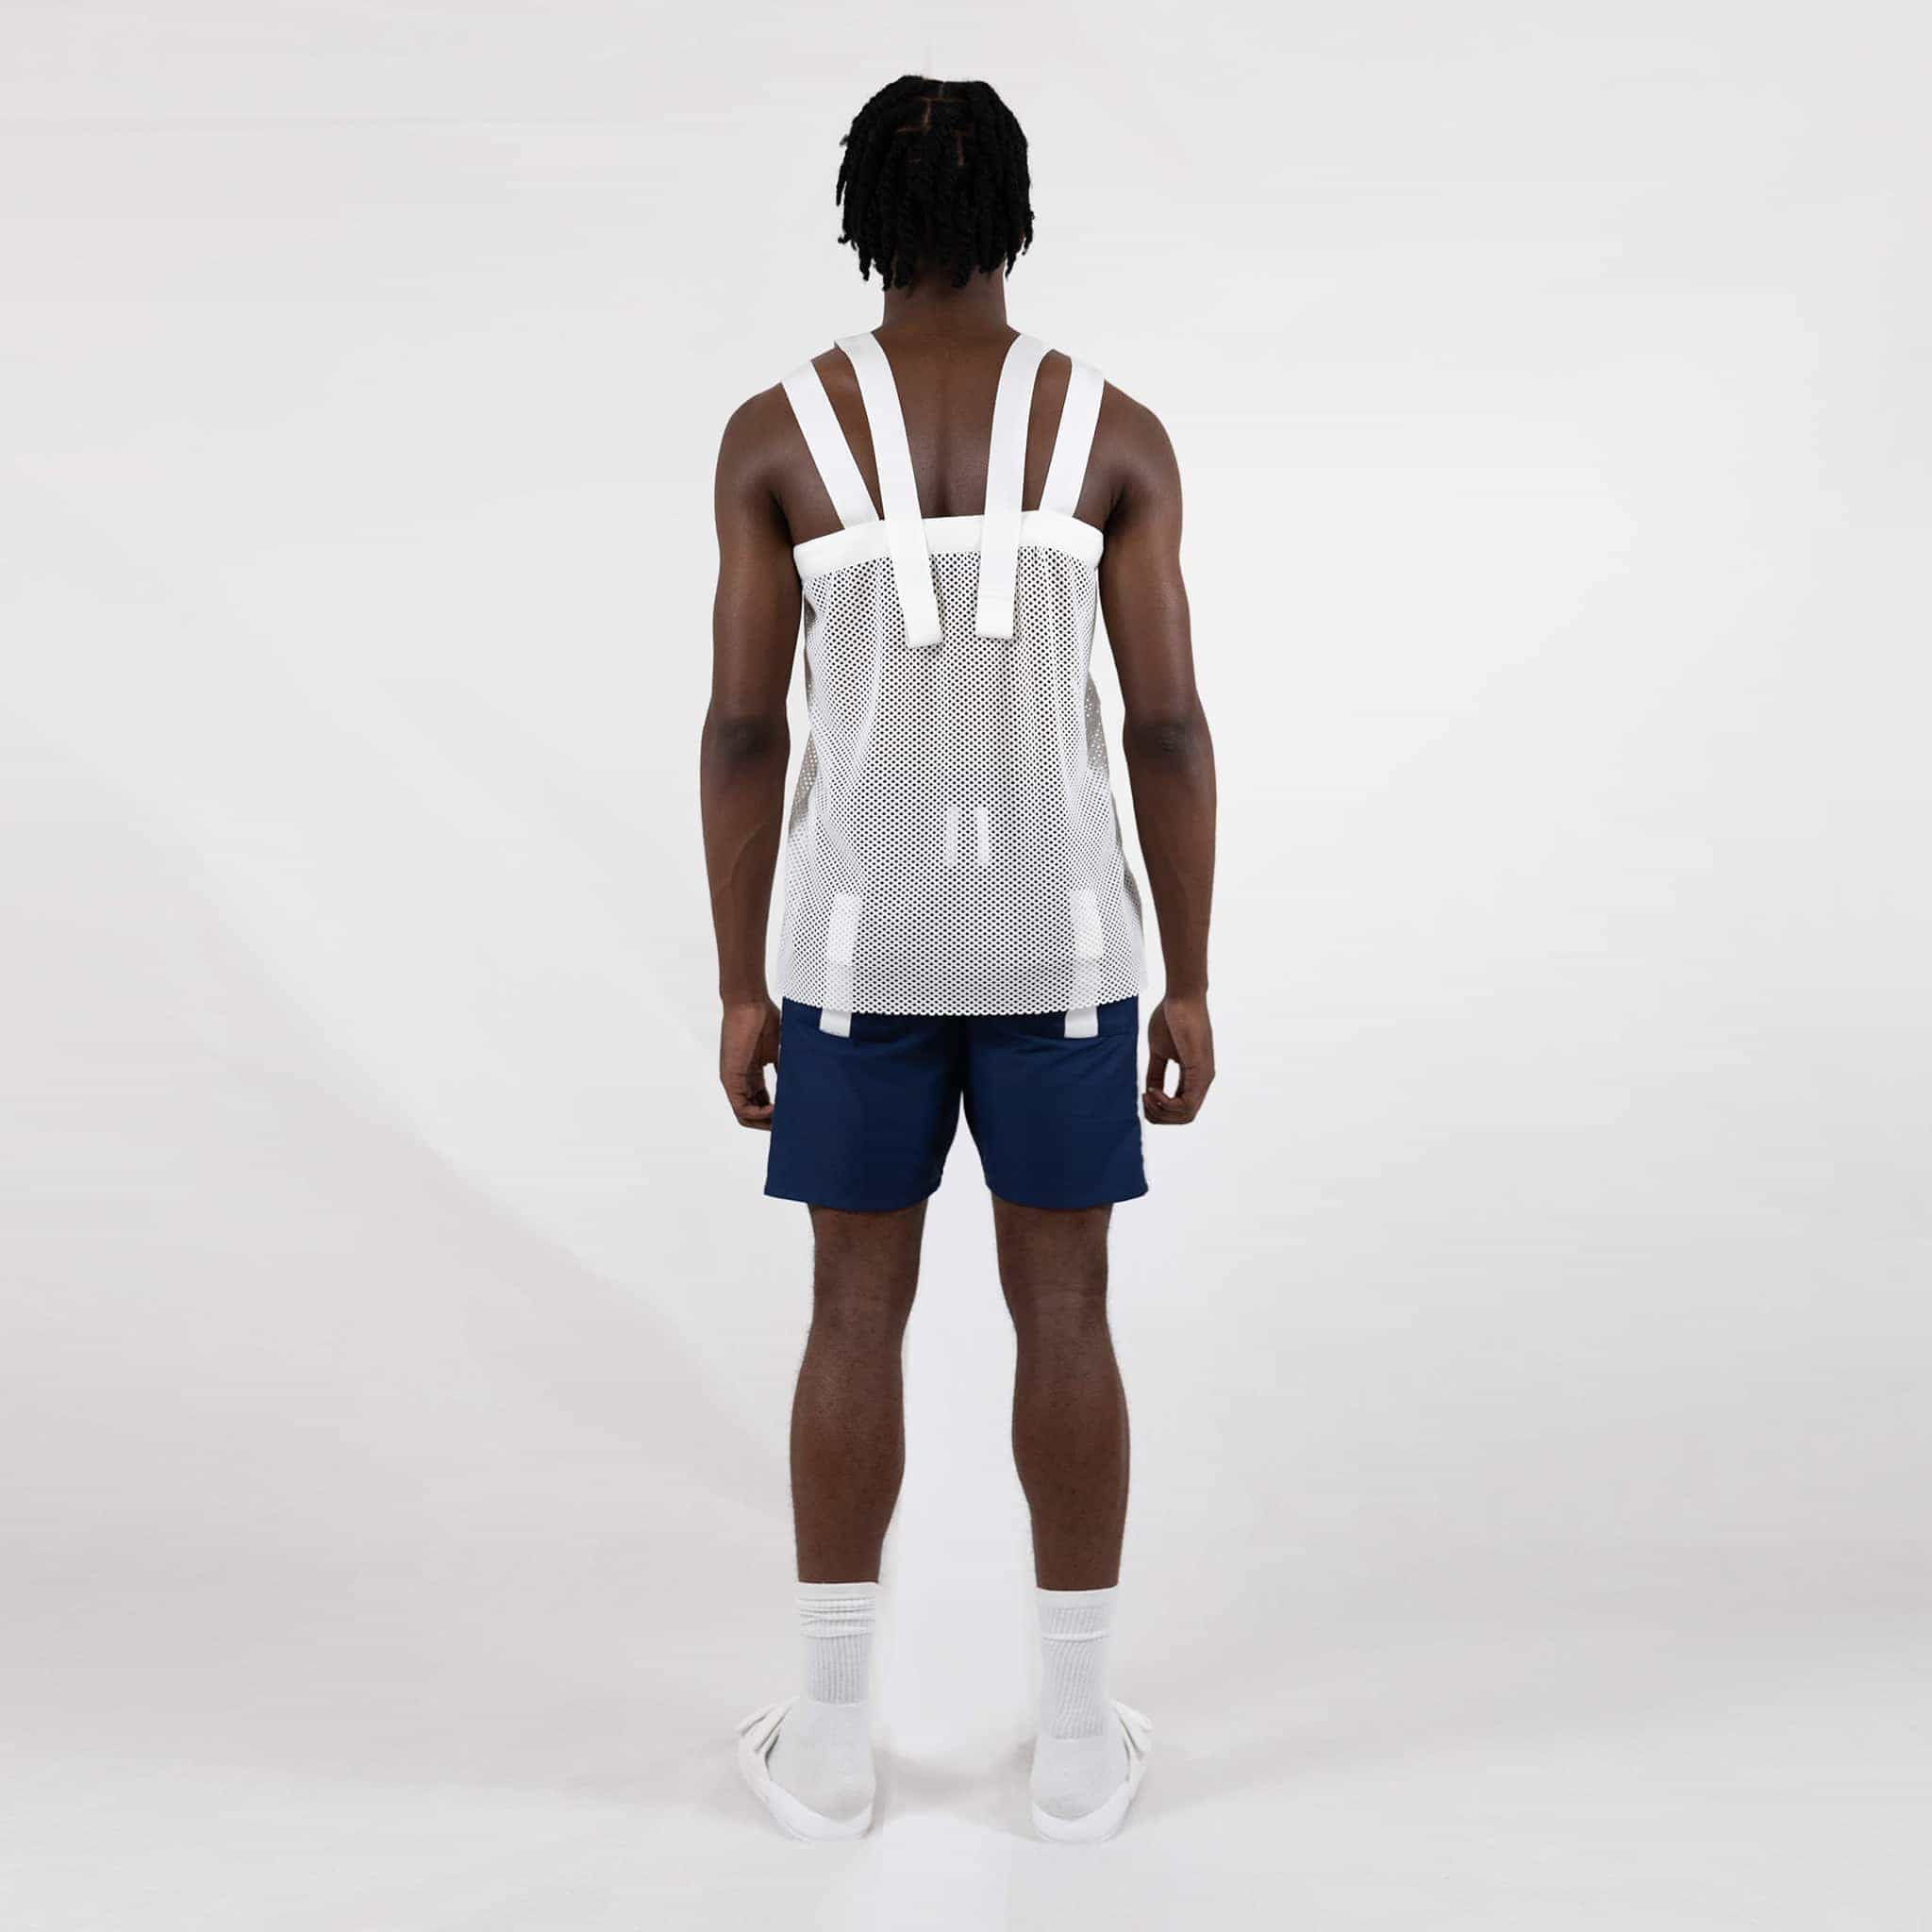 ZERØ London - Back view, White zero waste mens vest, zero waste fashion, designed & made in London